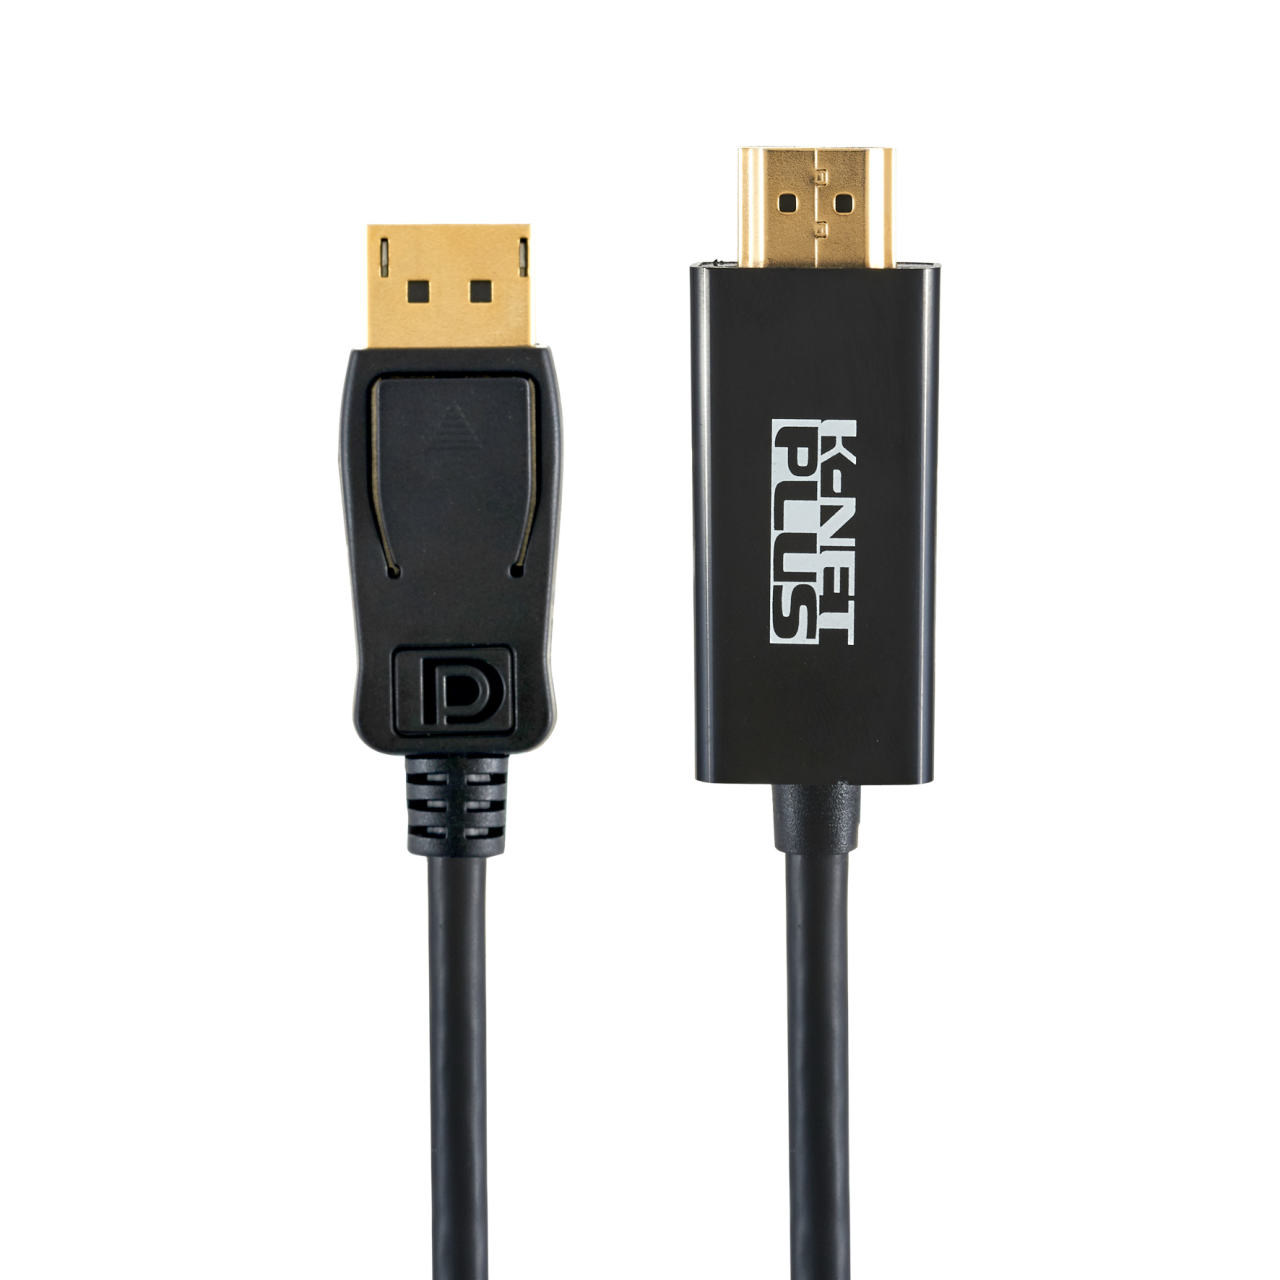 کابل Display Port به HDMI مدل KP-C2105 کی نت پلاس